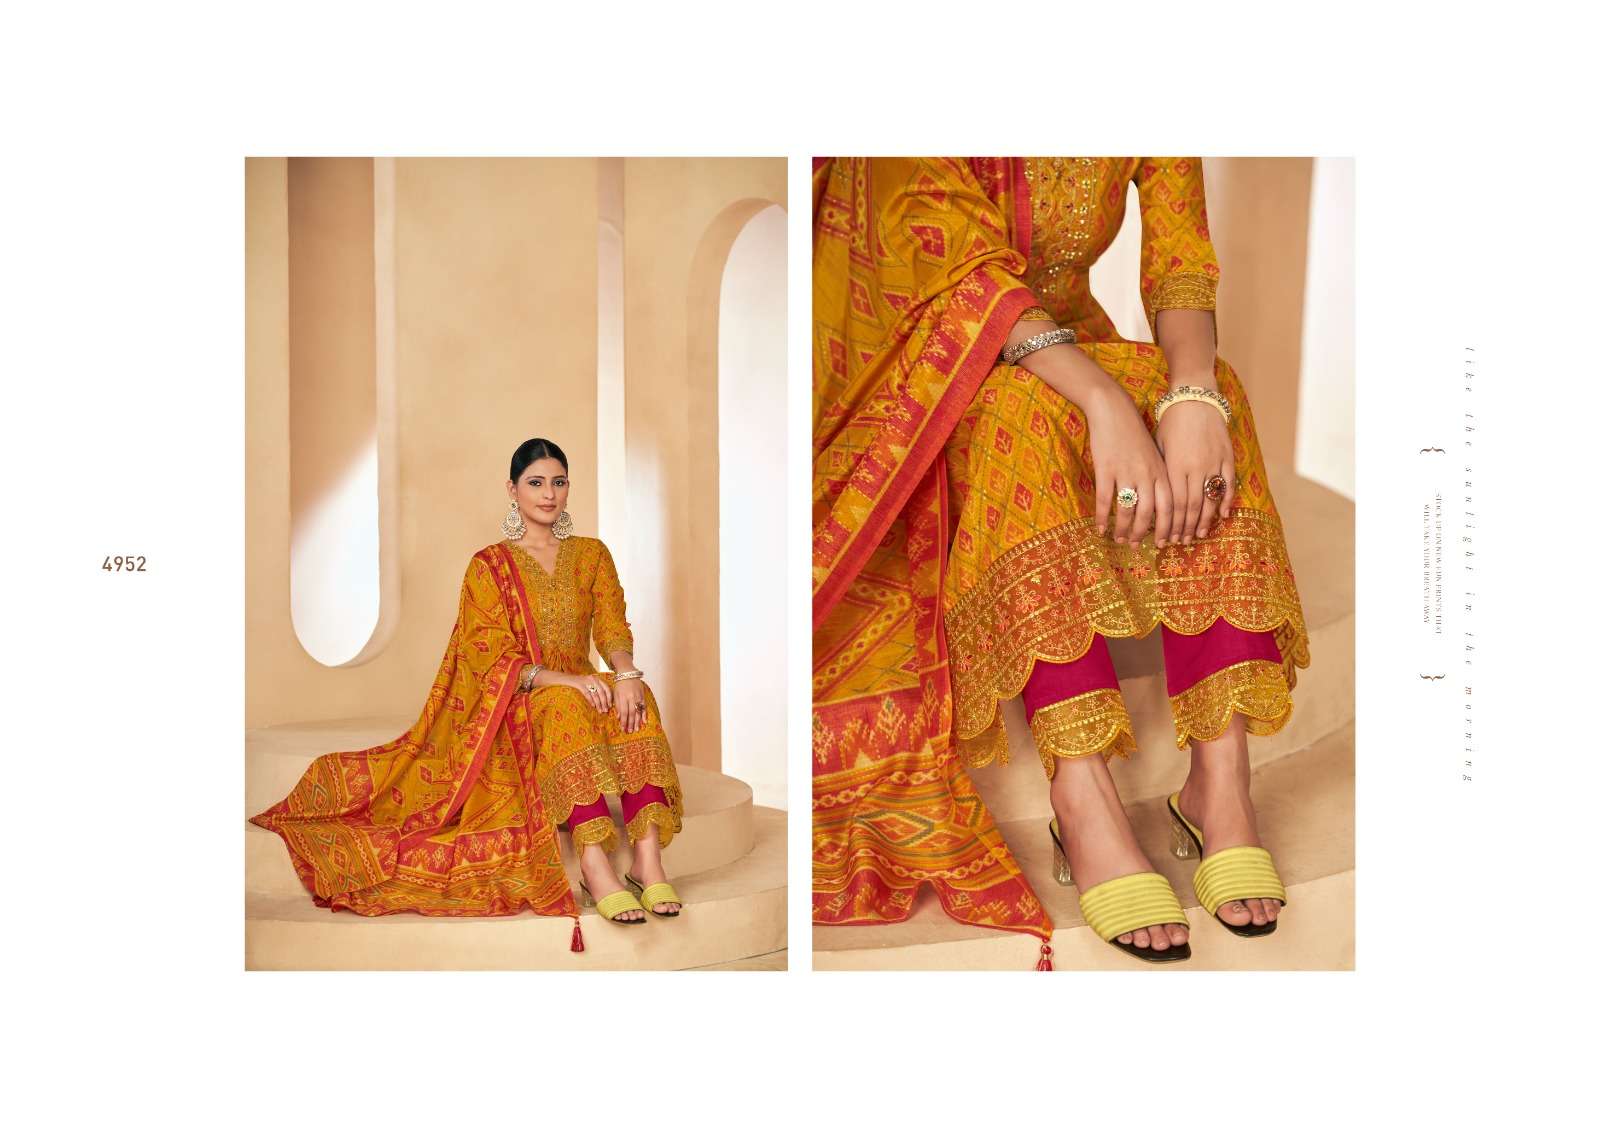 rangoon rashmika silk exclusive print top bottom with dupatta catalog